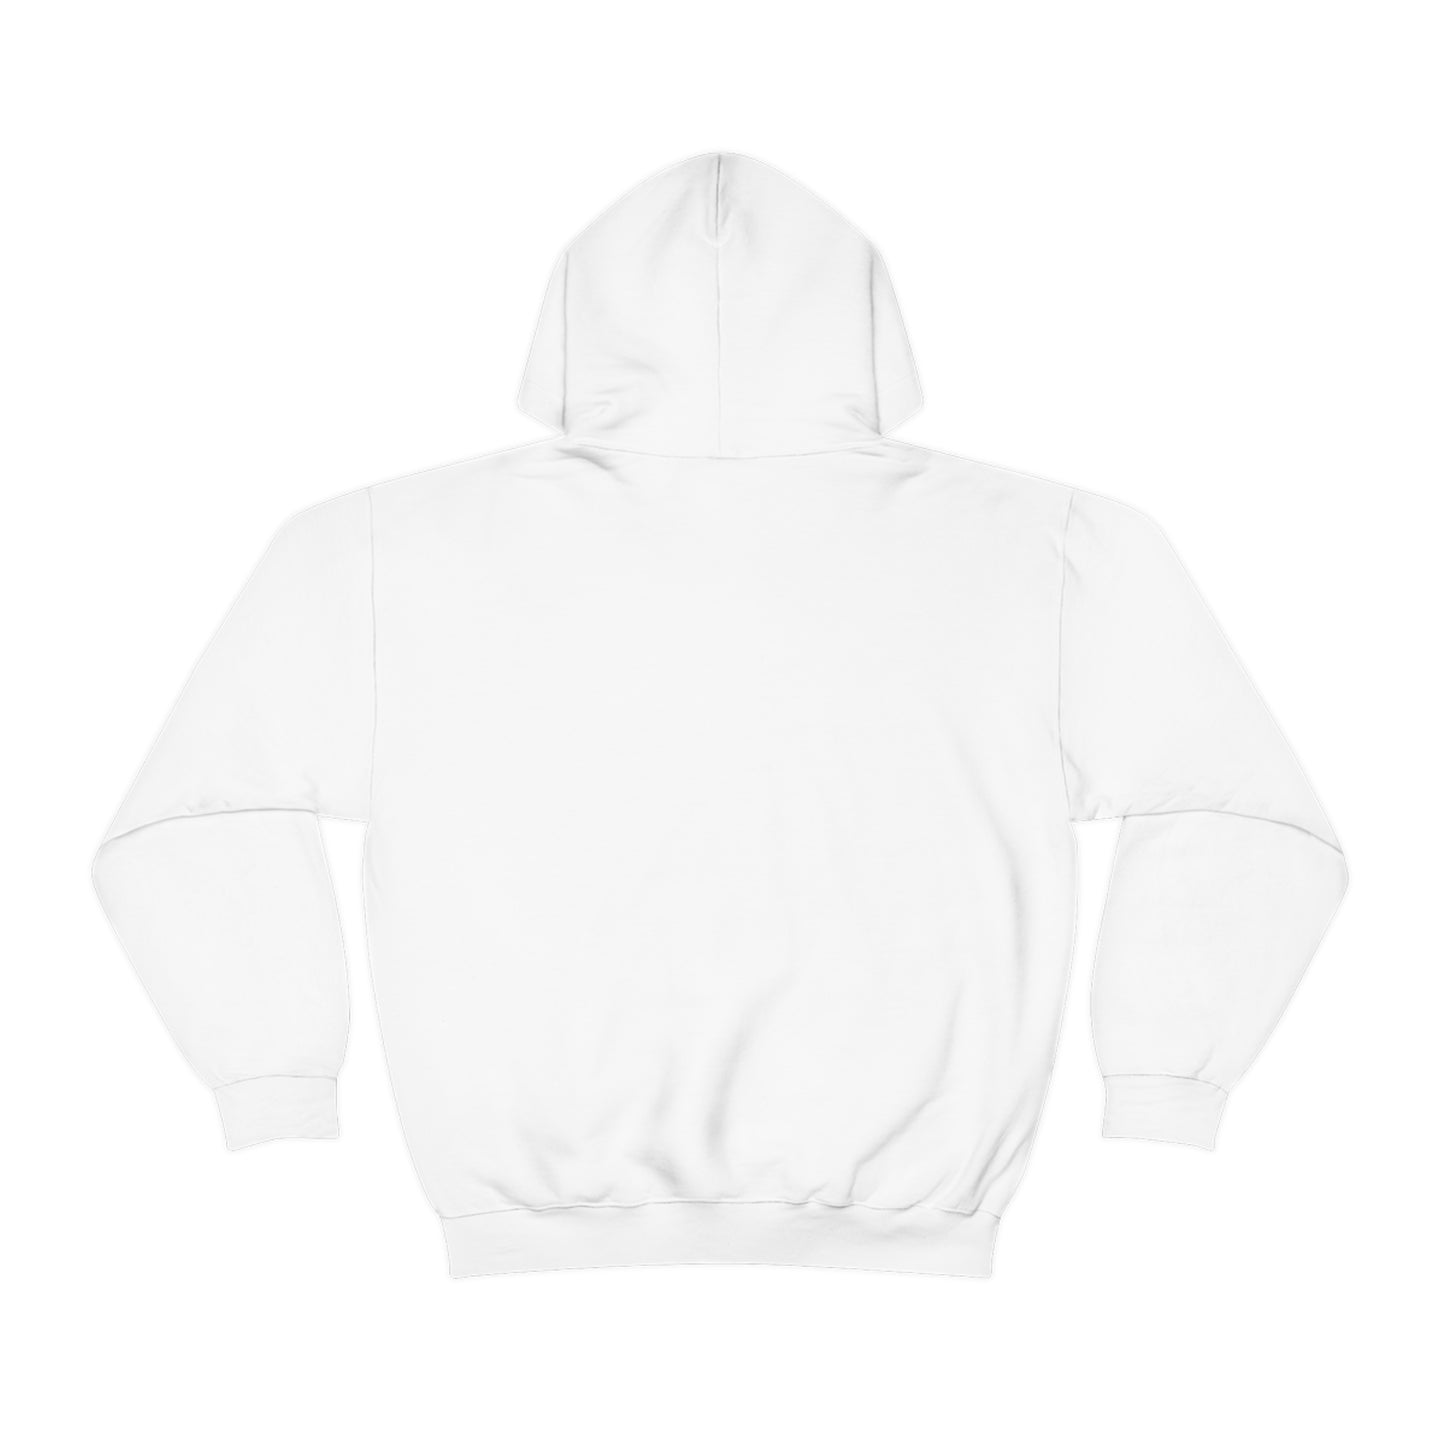 Unisex Heavy Blend™ Hooded Sweatshirt - The Rod Father